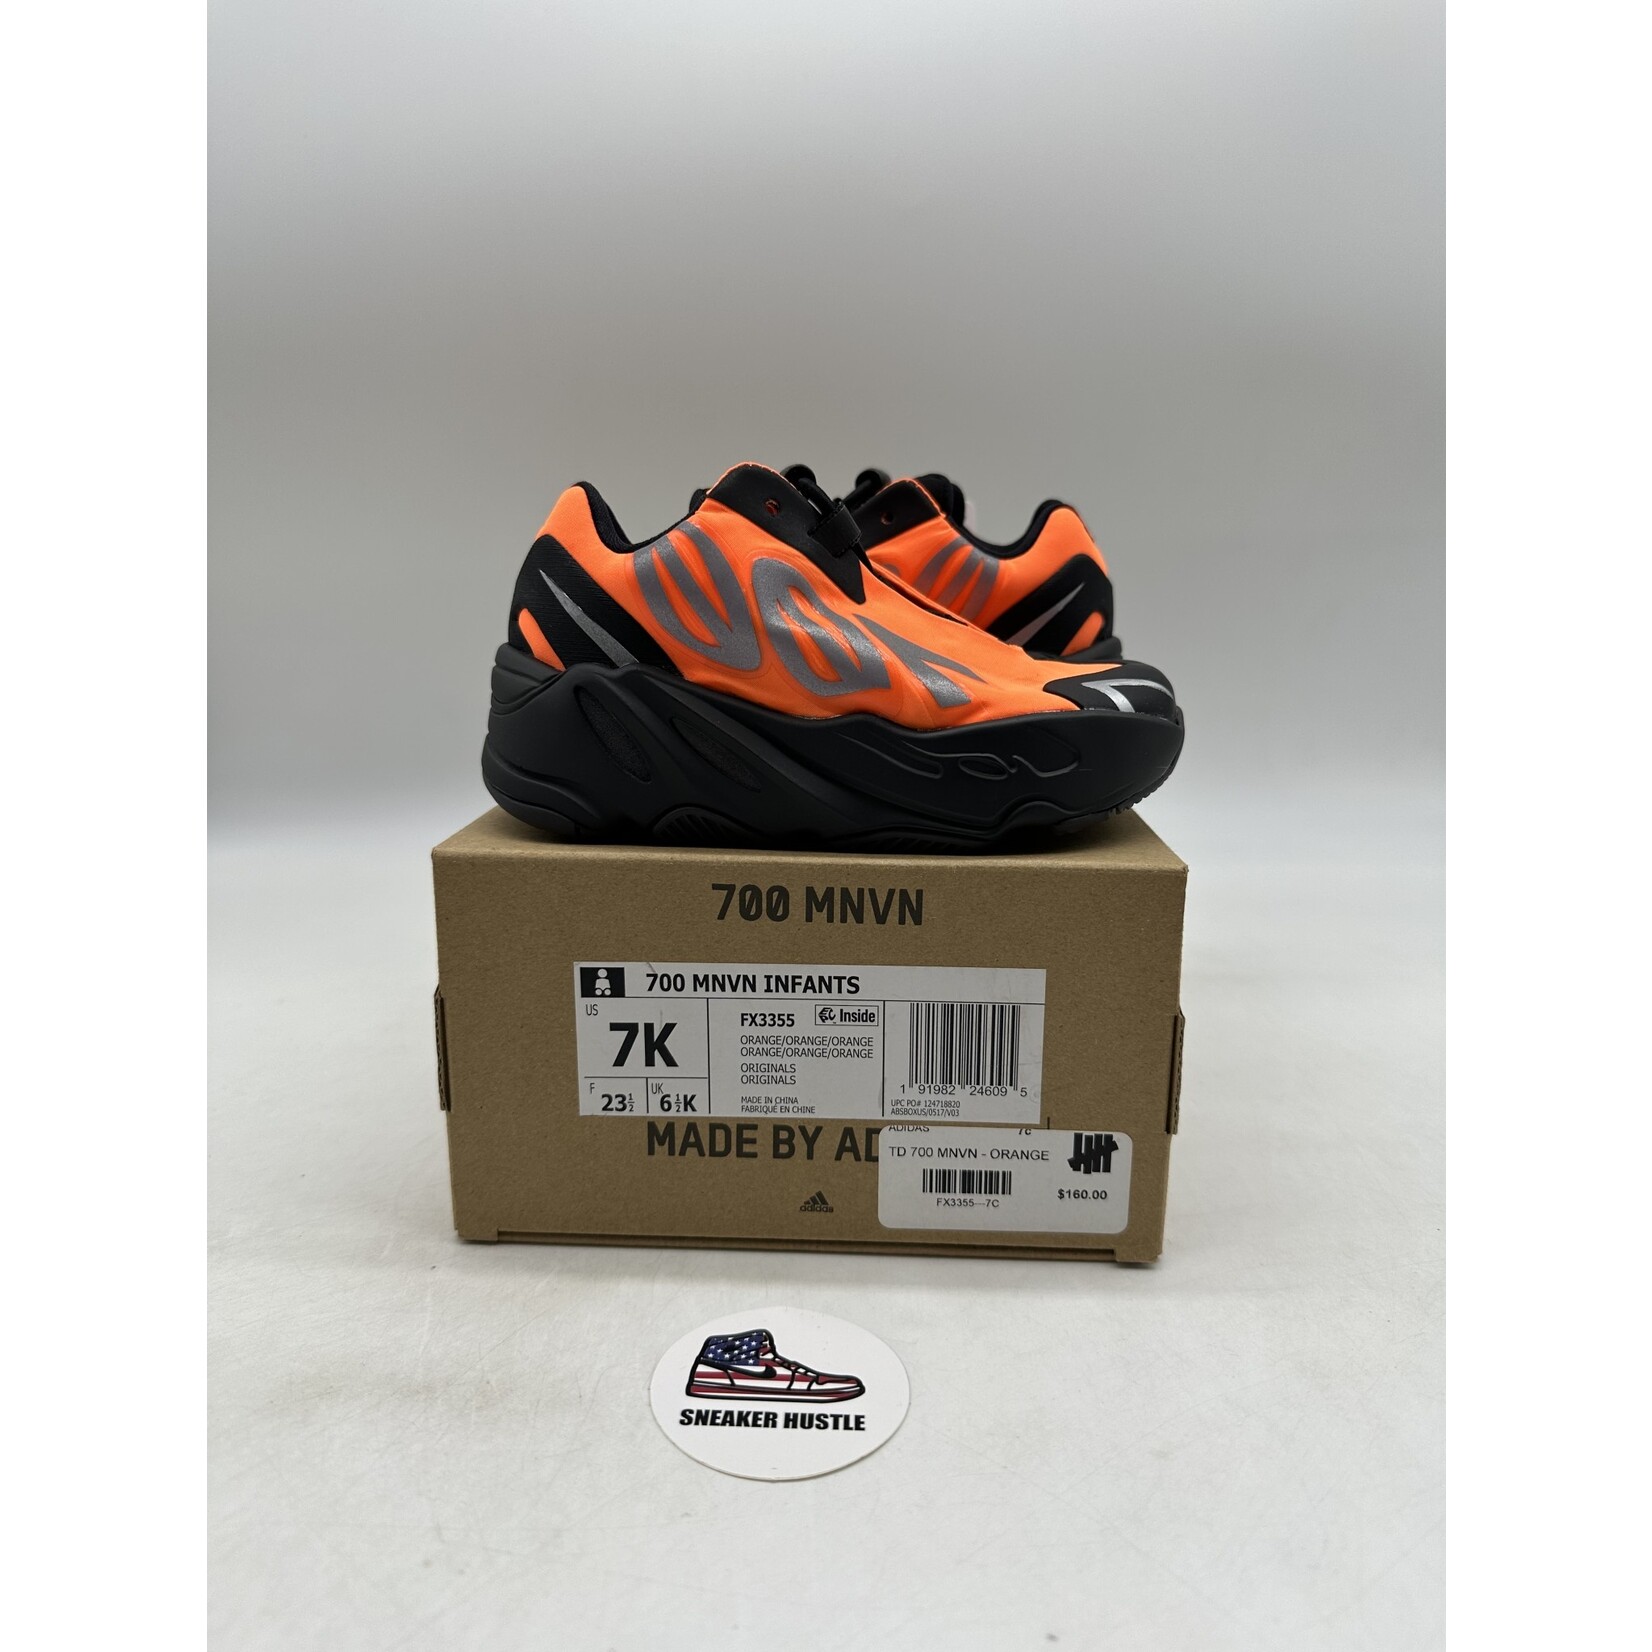 Adidas adidas Yeezy Boost 700 MNVN Orange (Infants)